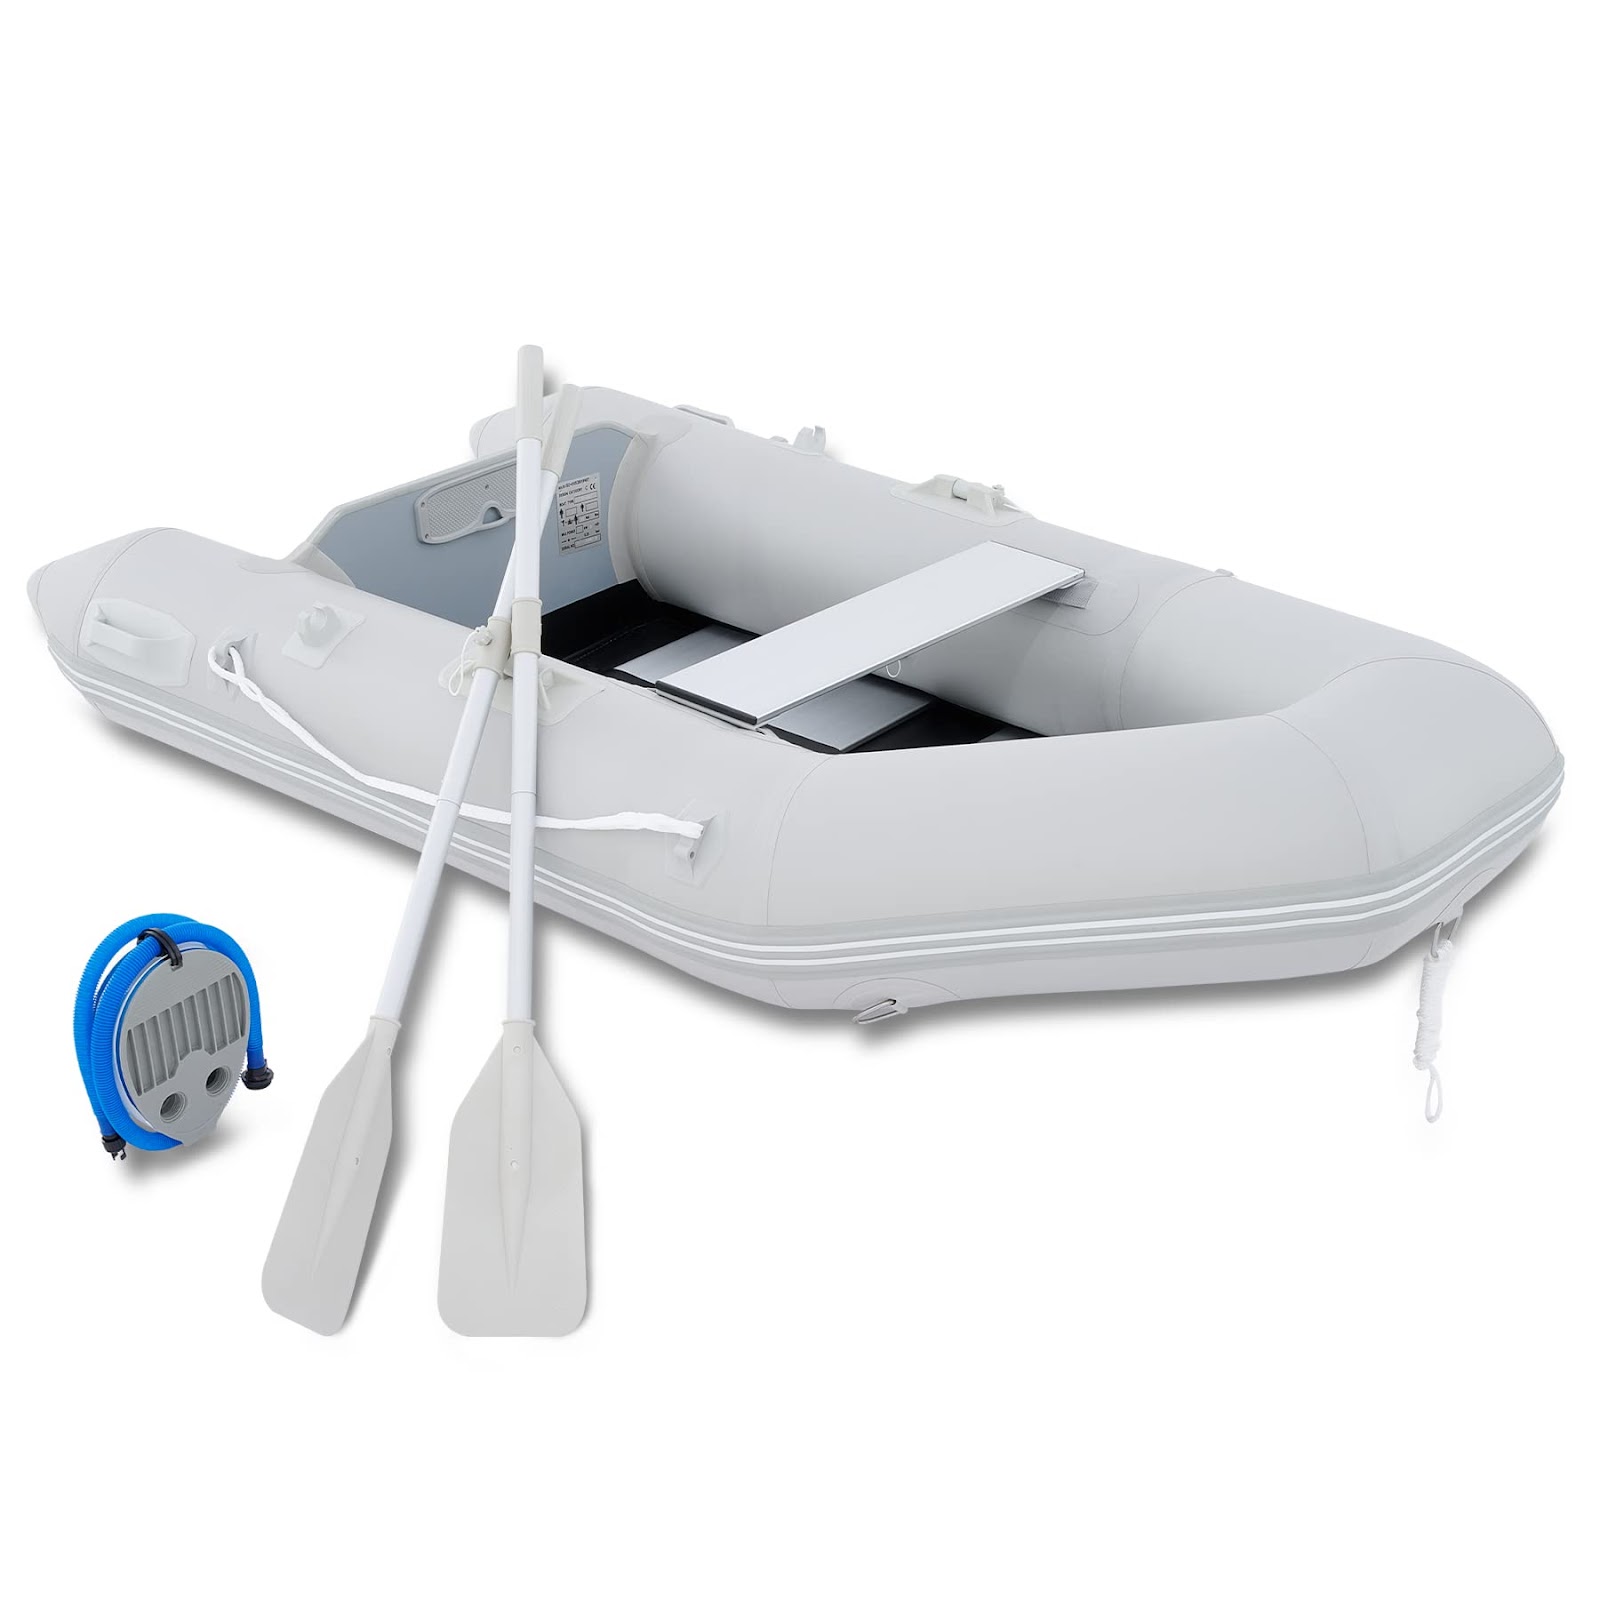 CO-Z Inflatable Kayak